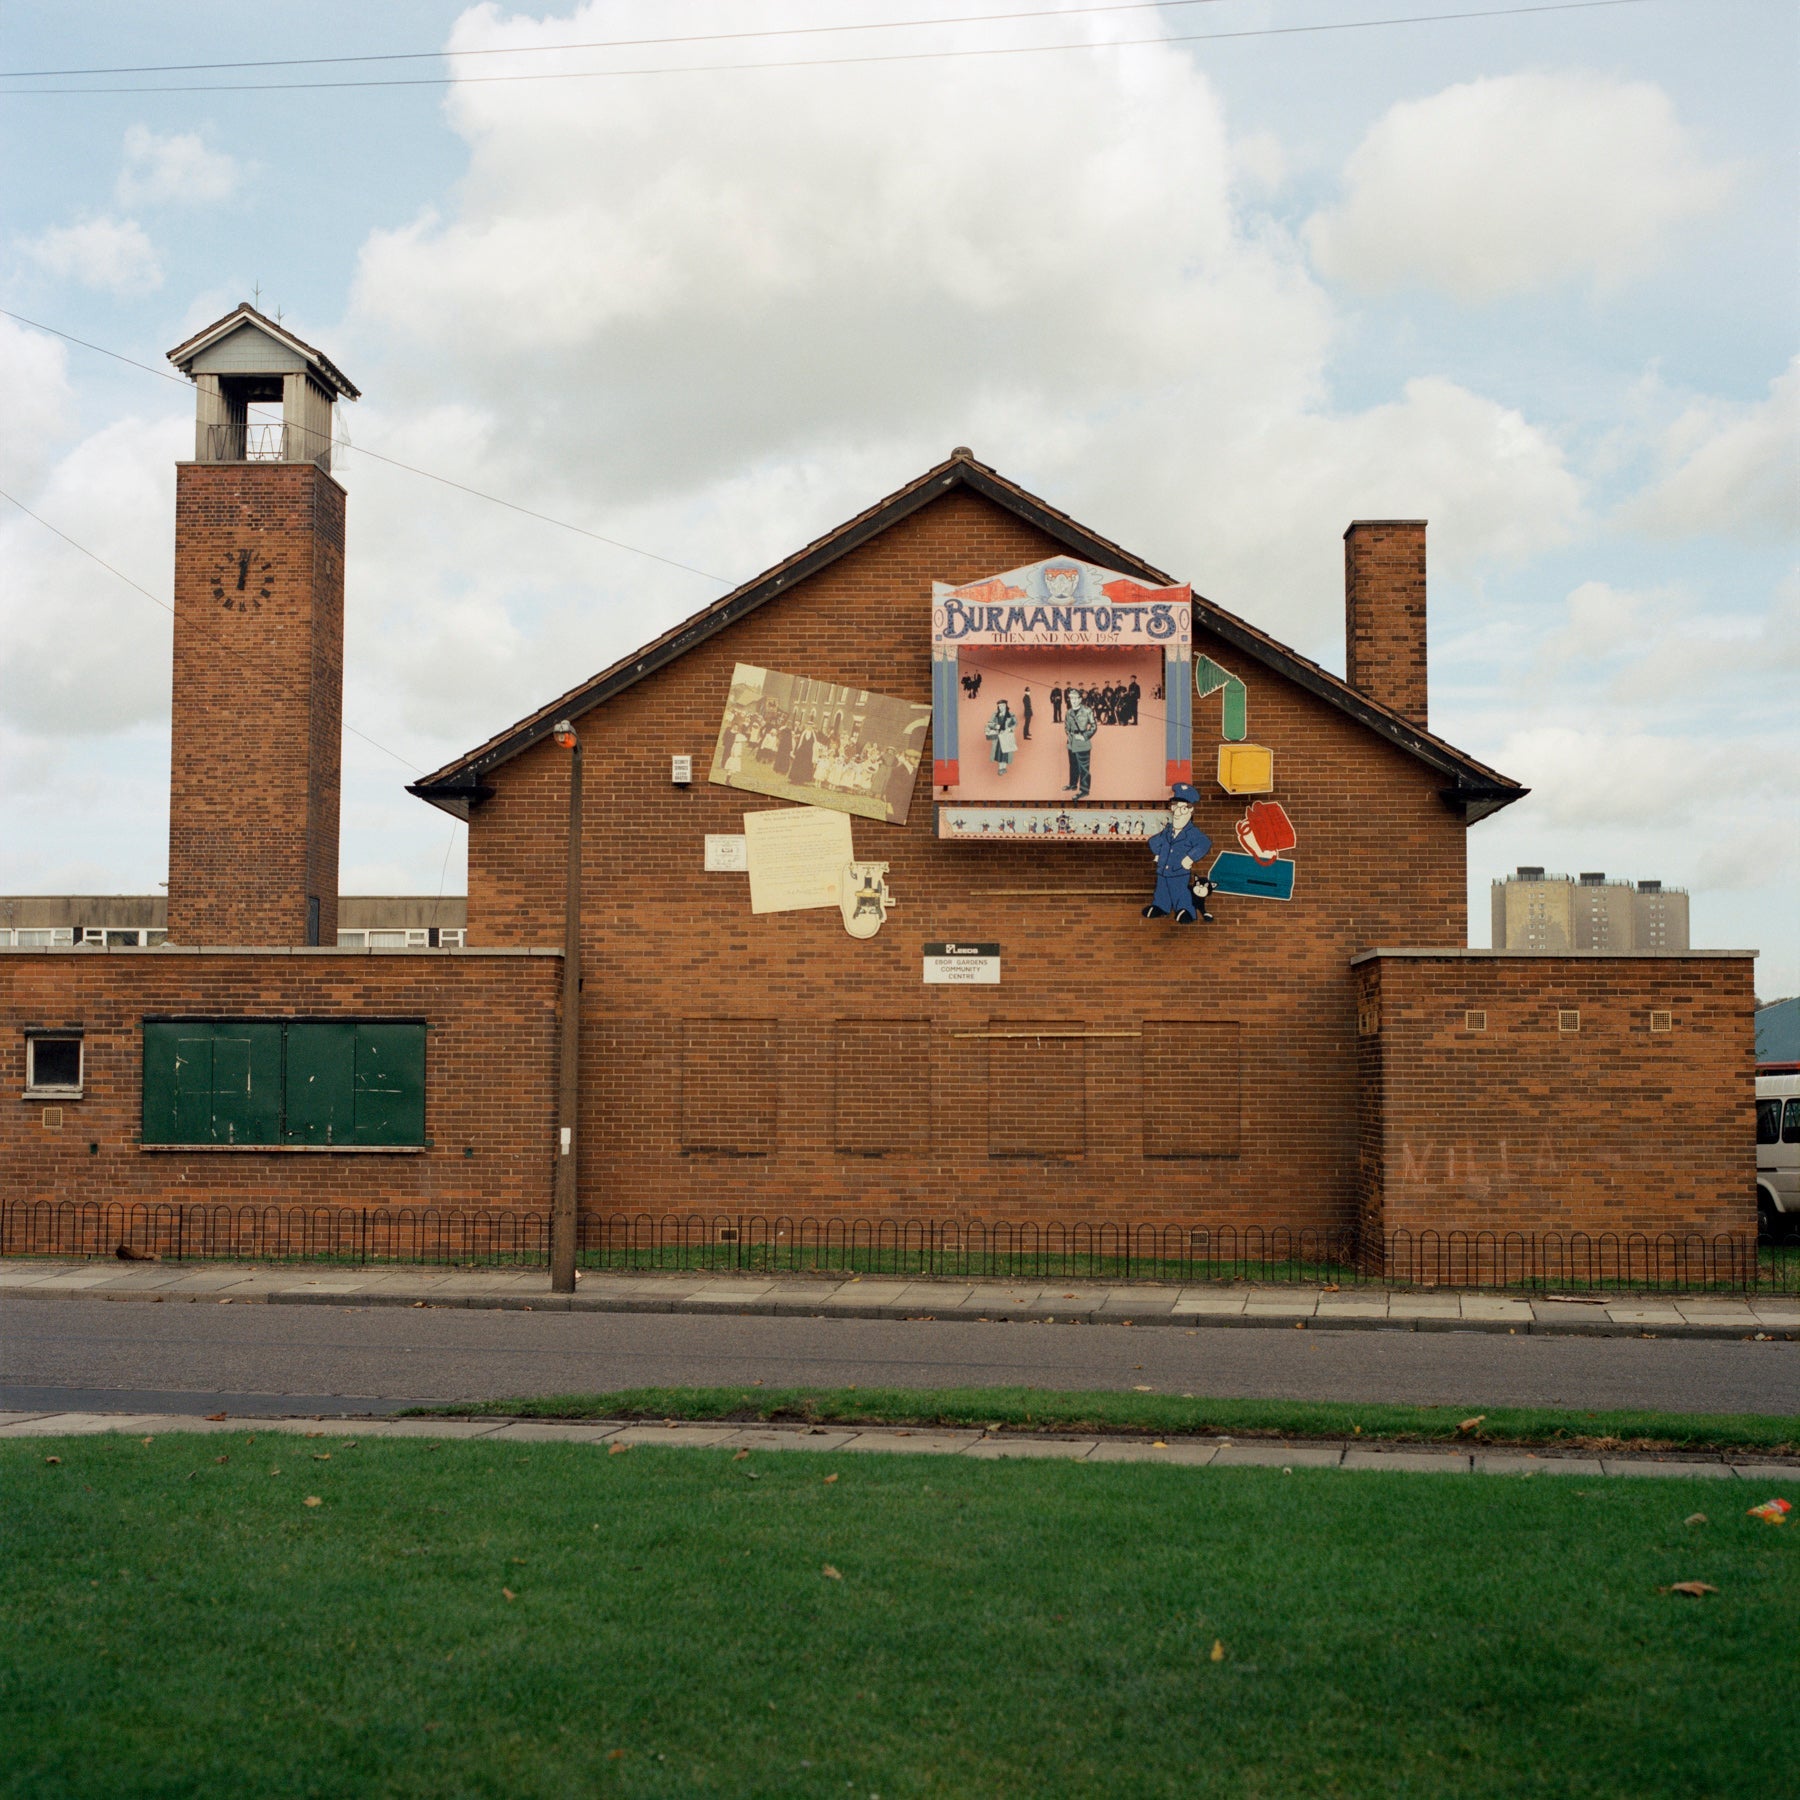 Community Centre, Leeds - 7x9" Print